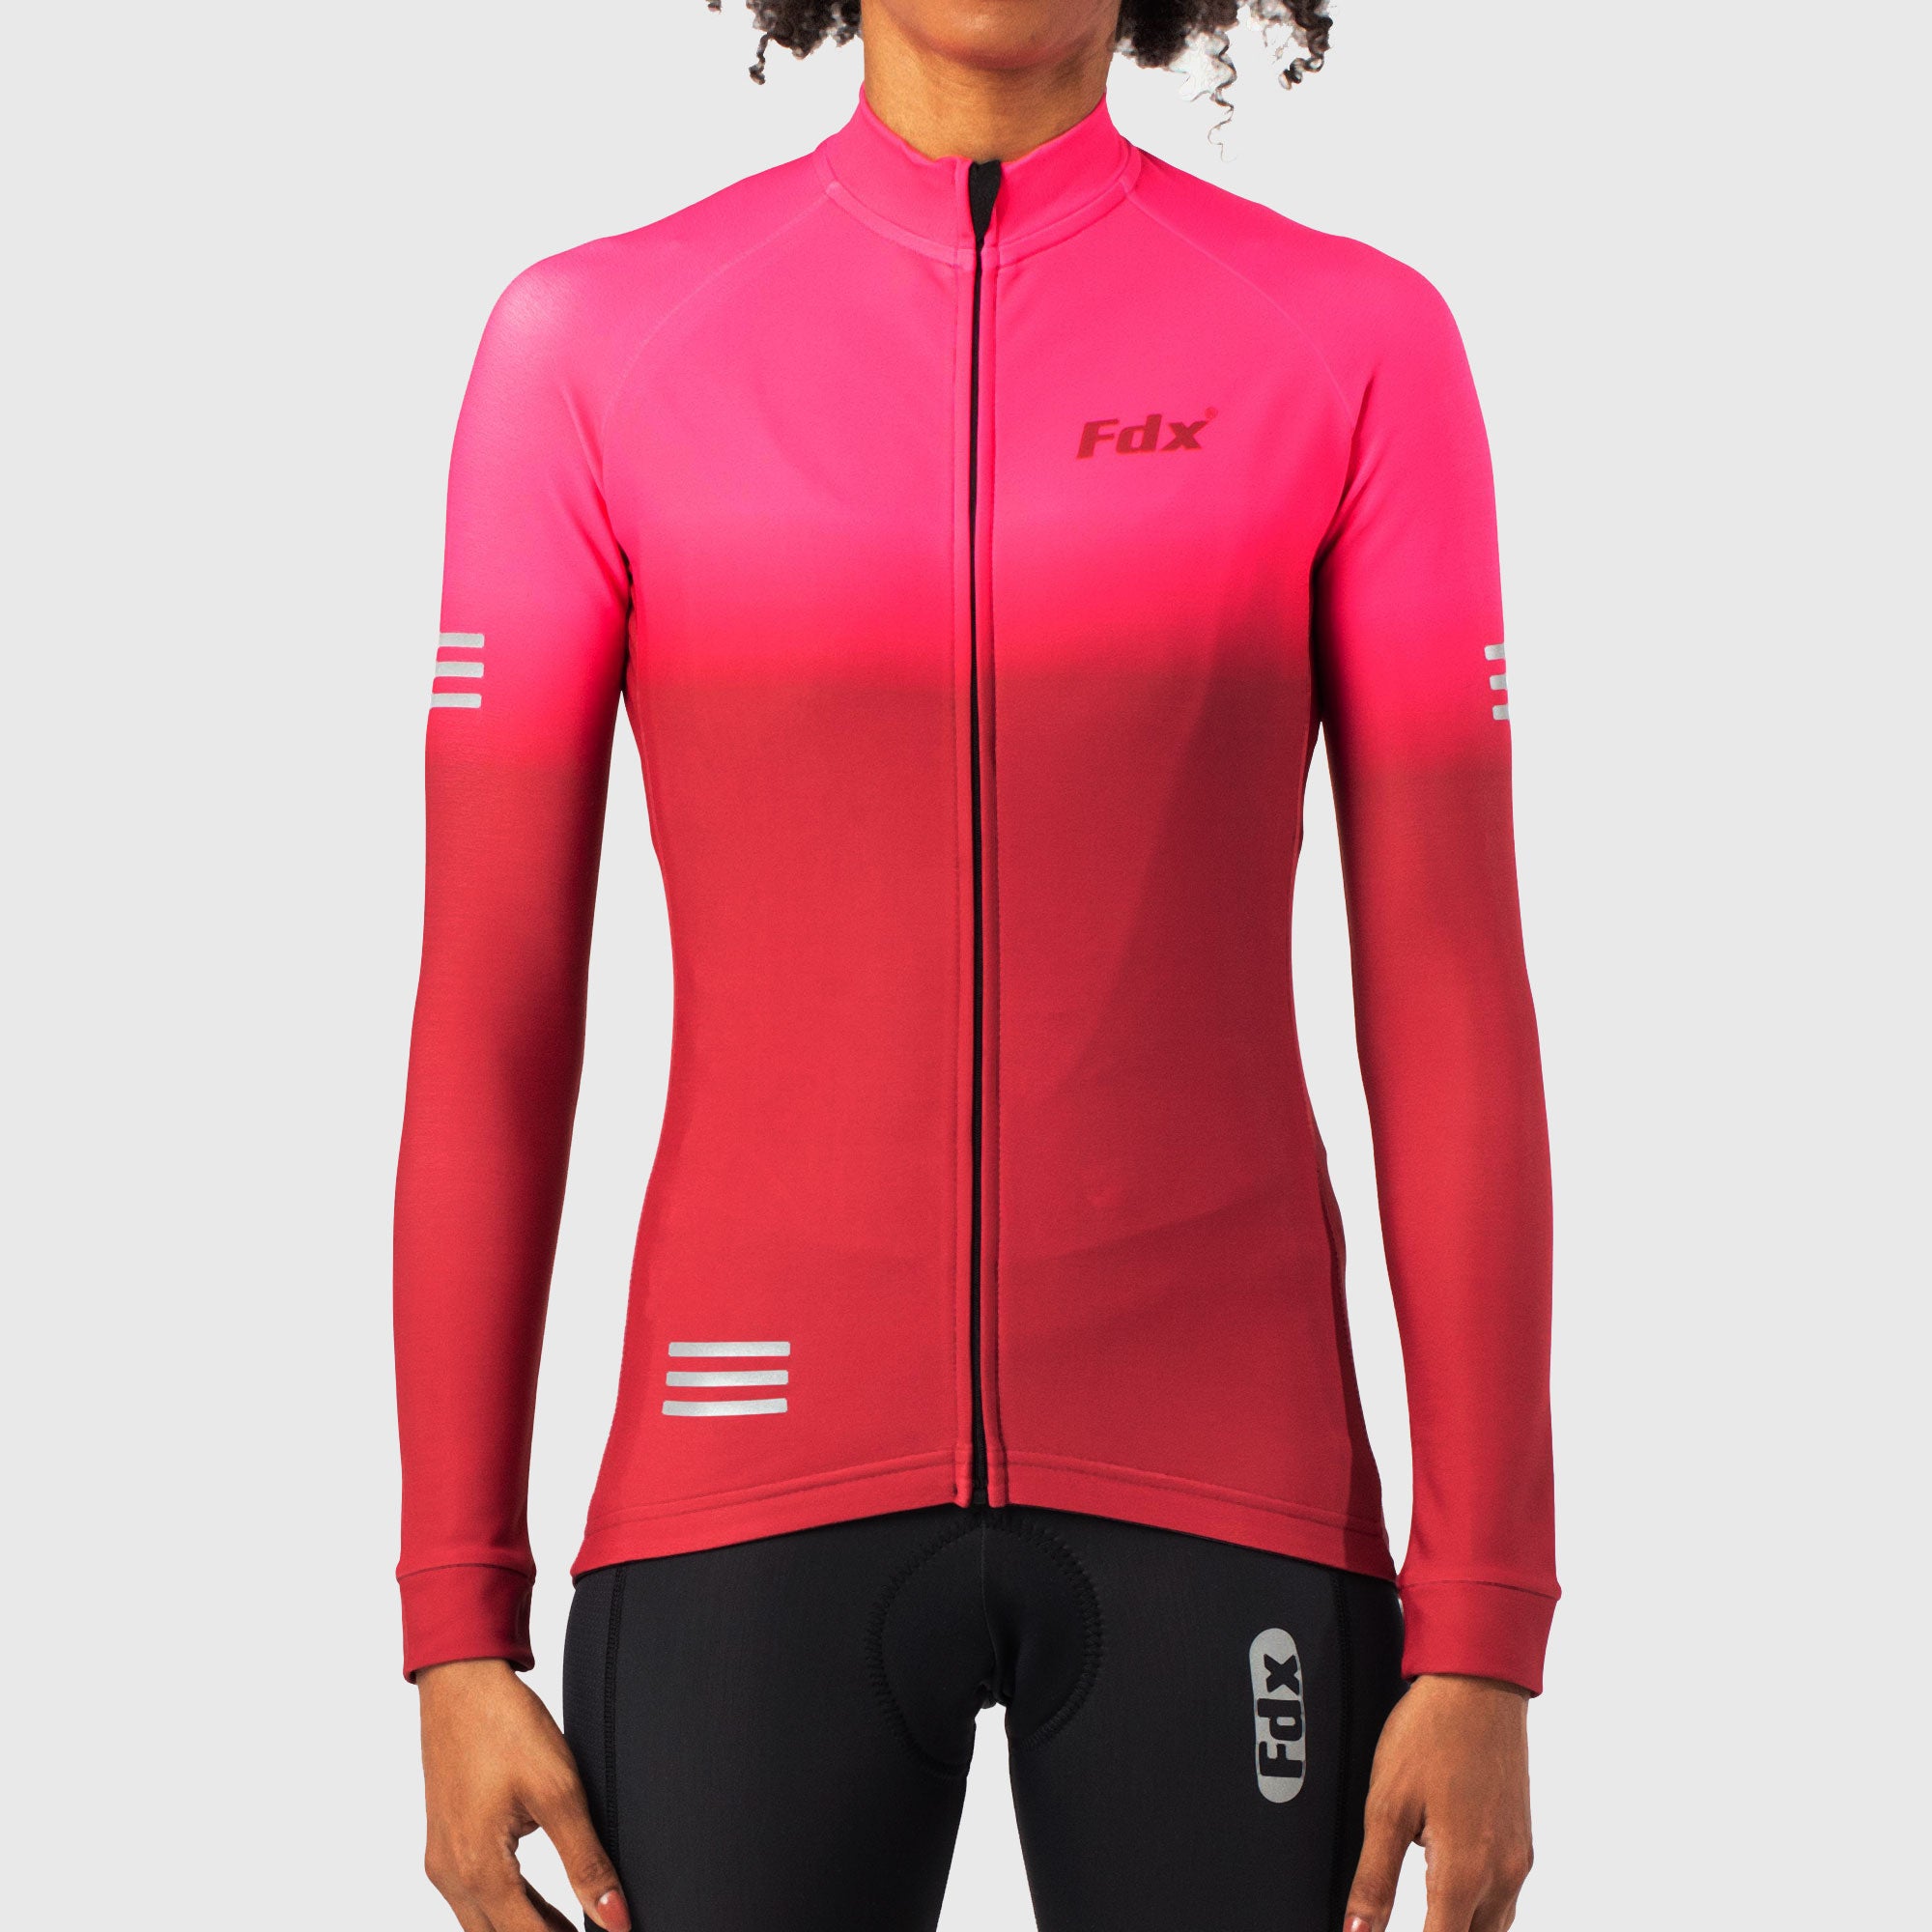 Fdx Best Women's Pink & Maroon Long Sleeve Cycling Jersey for Winter Roubaix Thermal Fleece Shirt Road Bike Wear Top Full Zipper, Lightweight  Pockets & Hi viz Reflectors - Duo